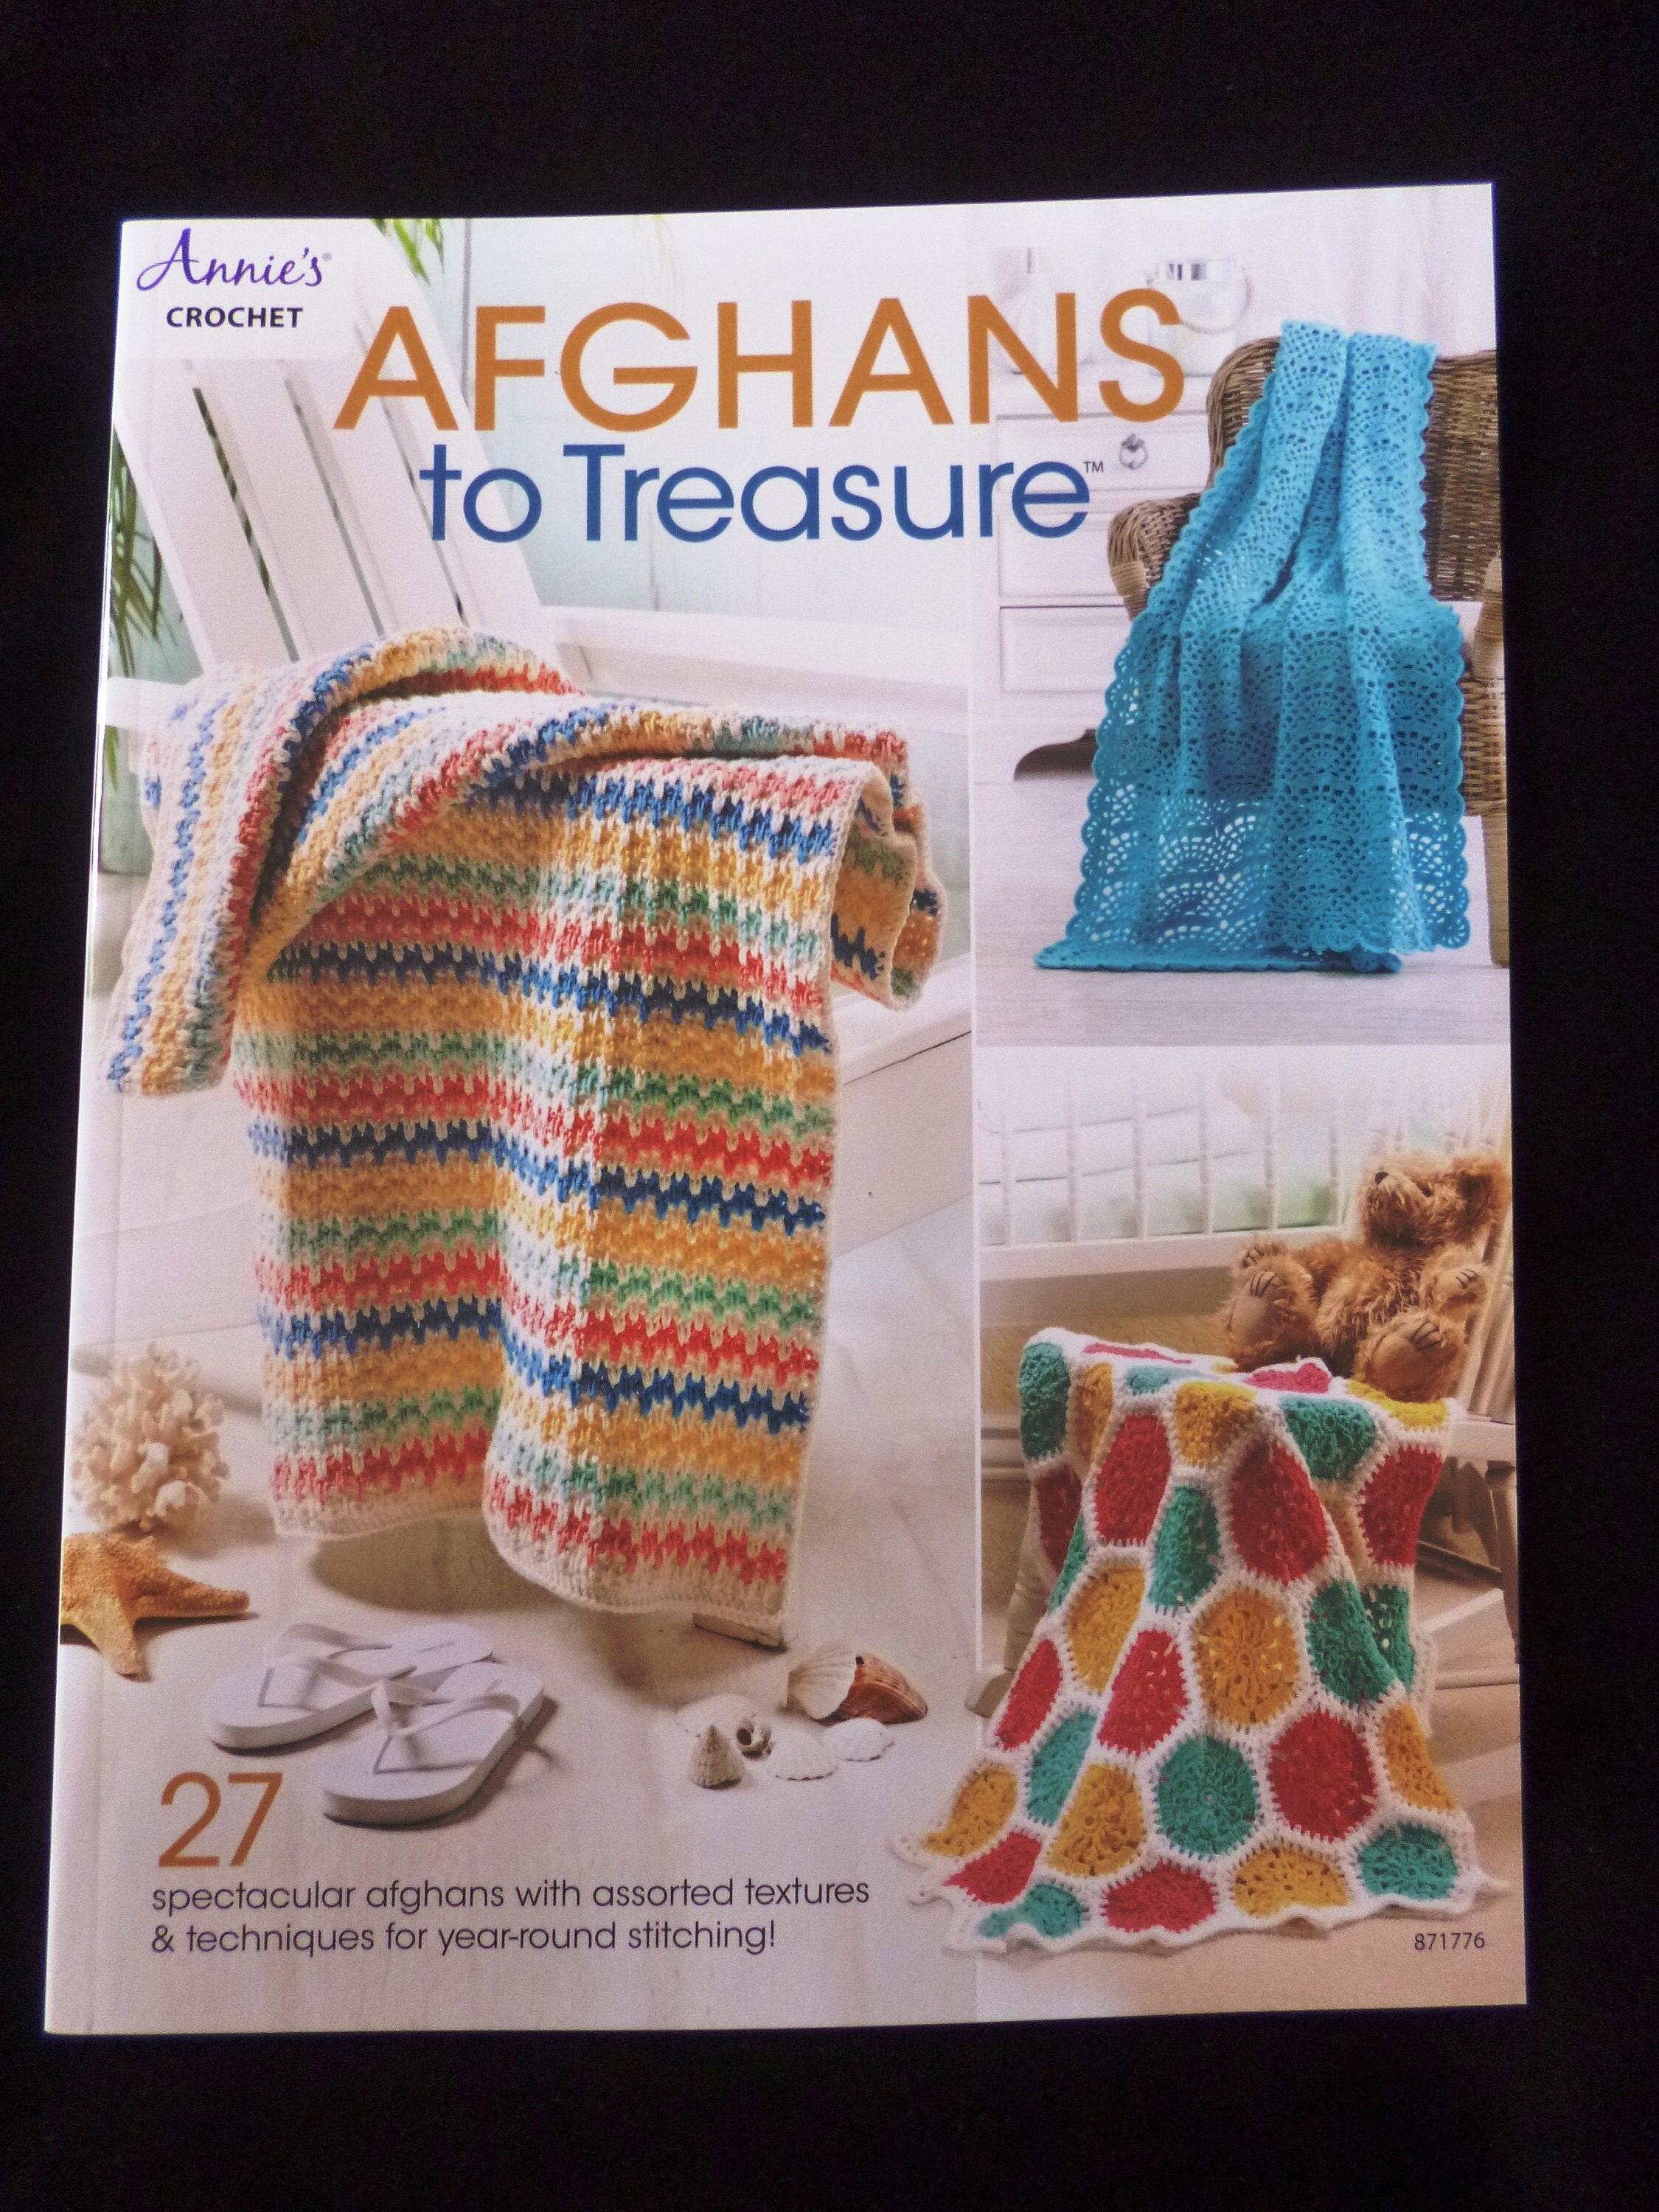 Big Book of Crochet Afghans